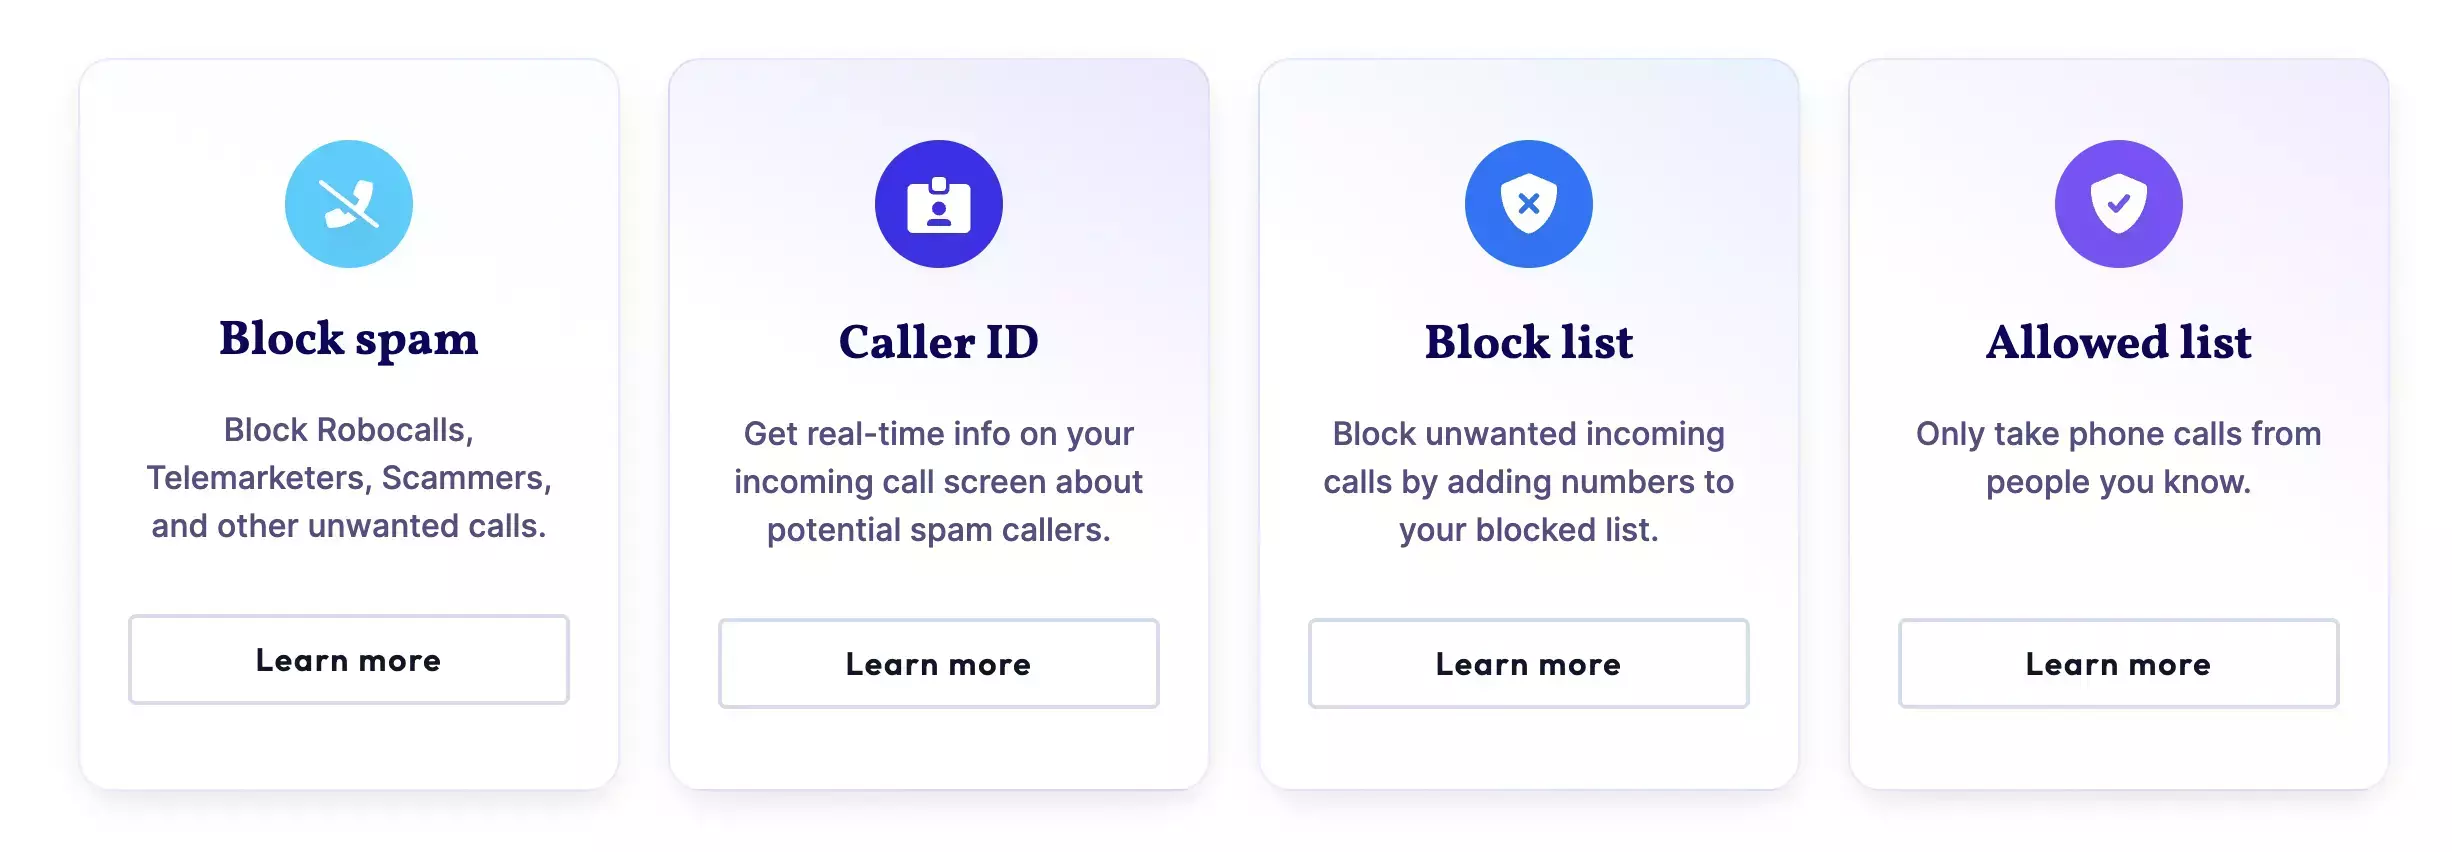 An image of Community Phone landline spam blocker features